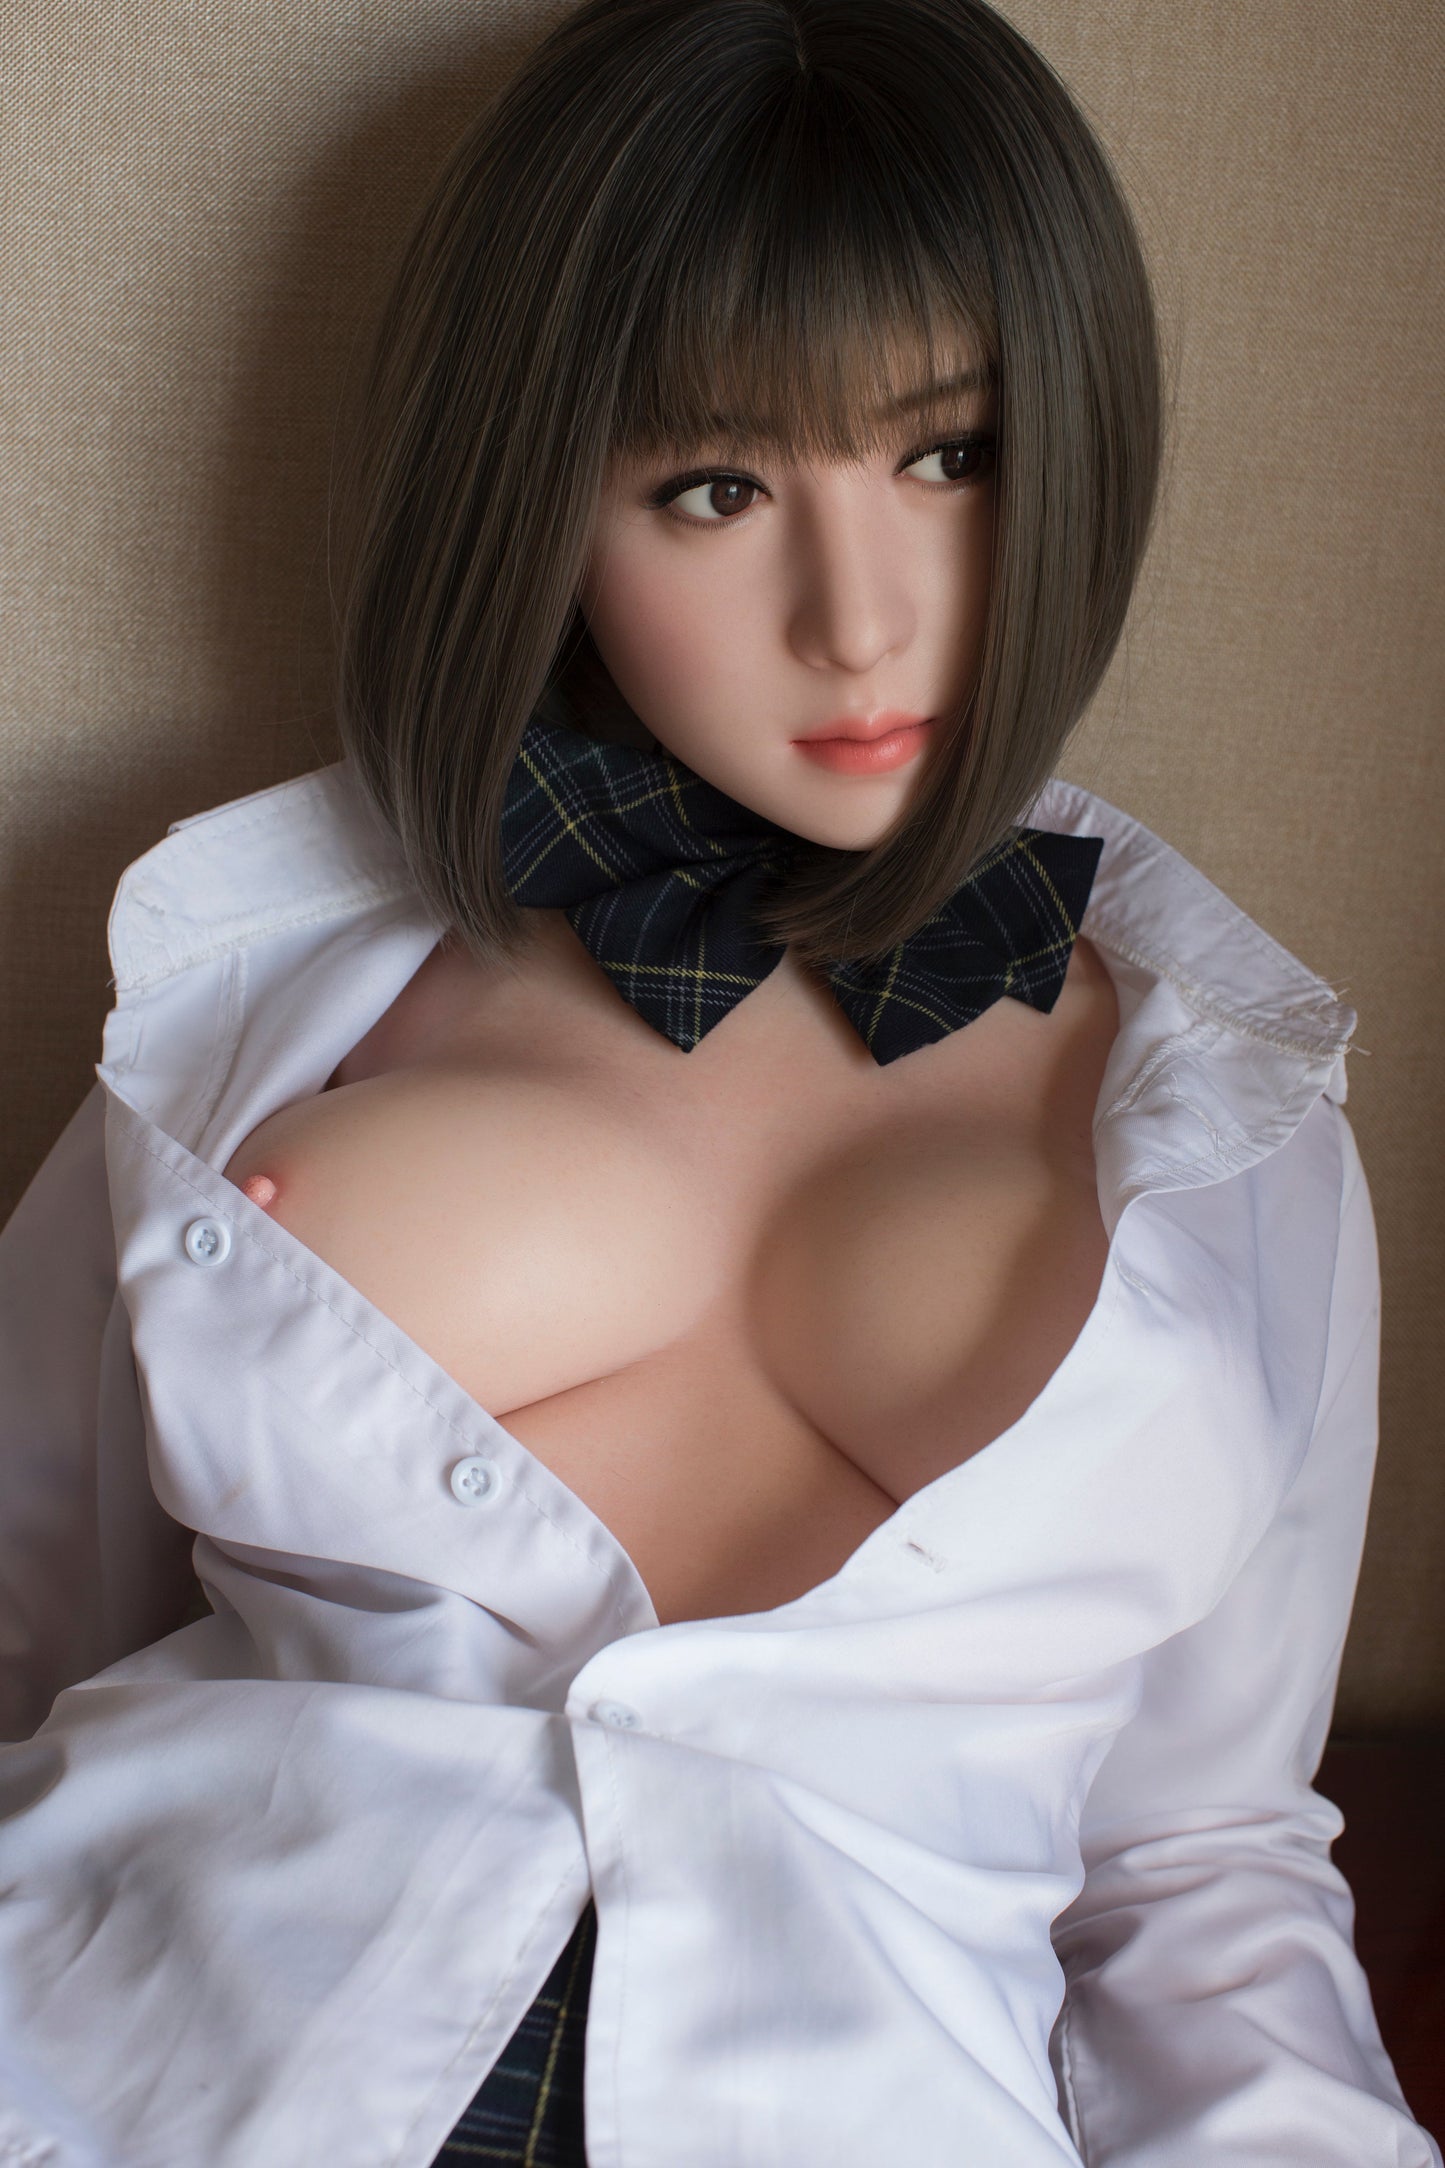 Gynoid Model 6 - Misatto Shinohara - Love Dolls 4U